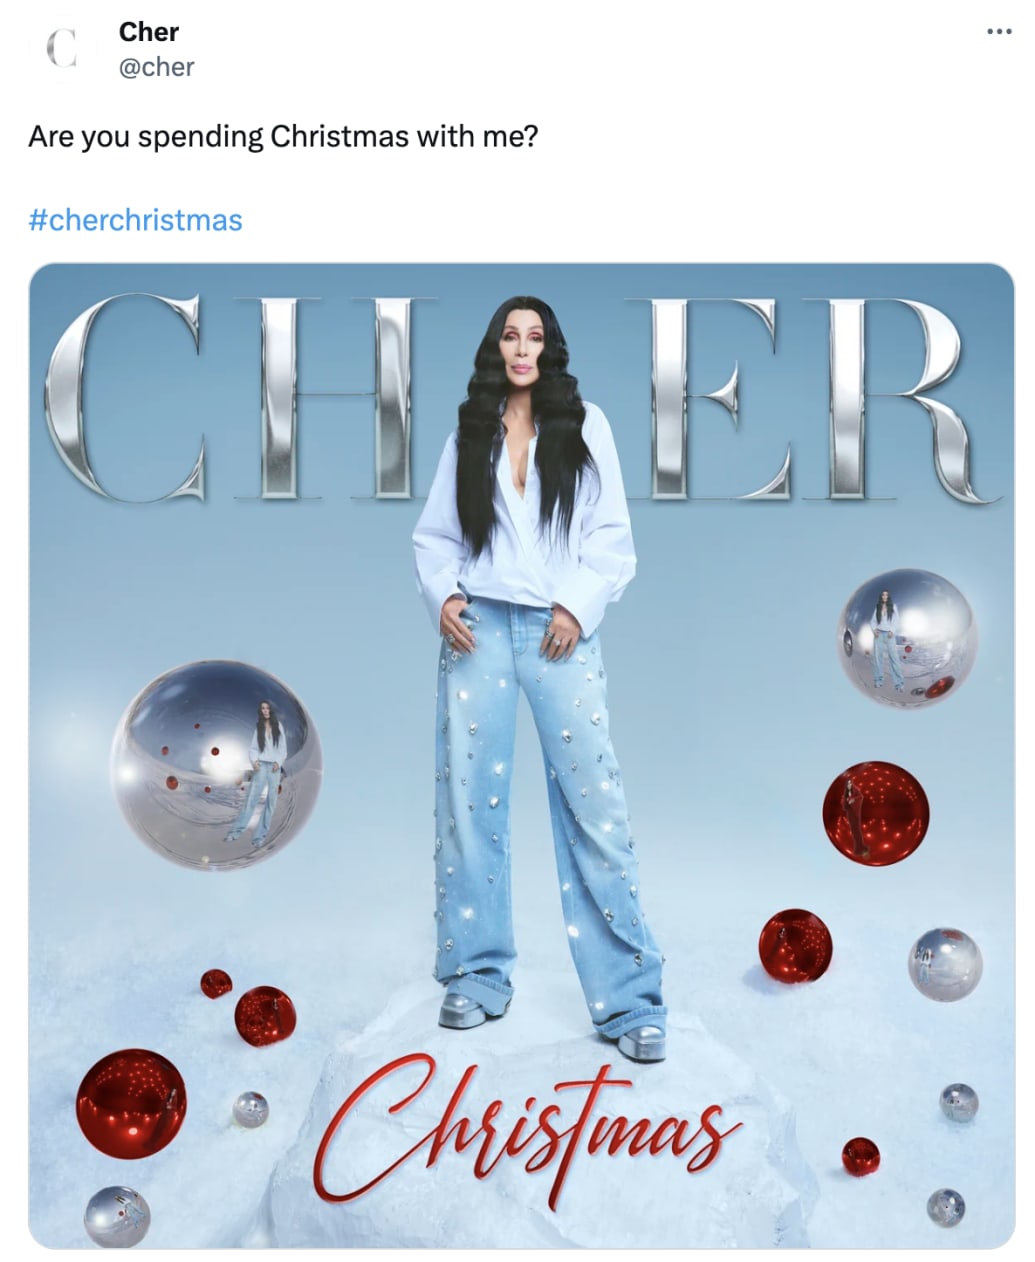 A screenshot of Cher's tweet about Christmas